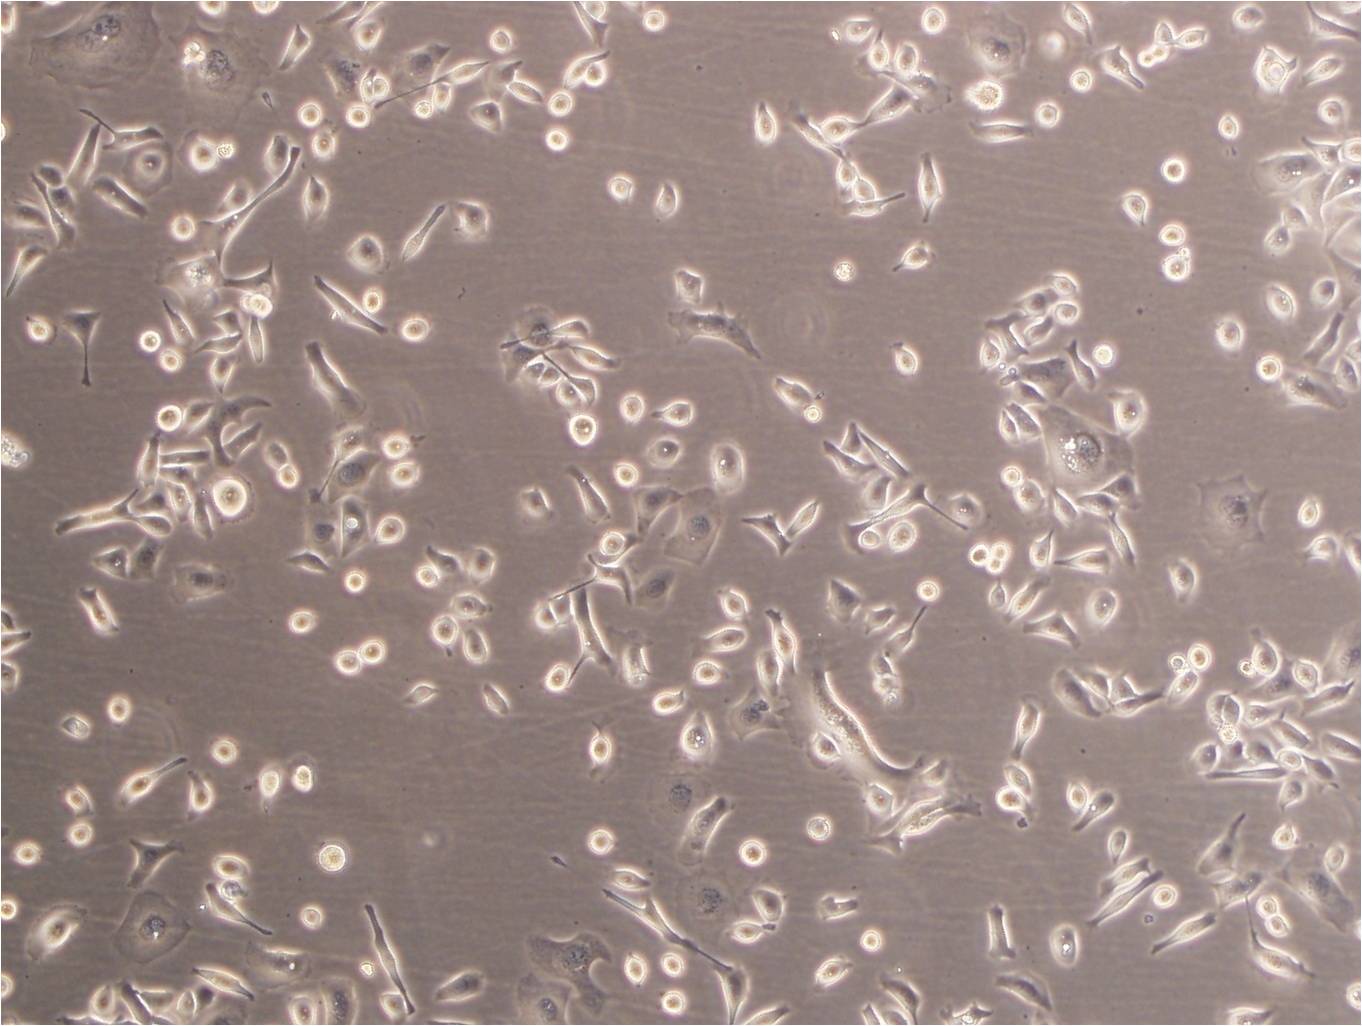 HEC-151 Adherent人子宫内膜癌细胞系